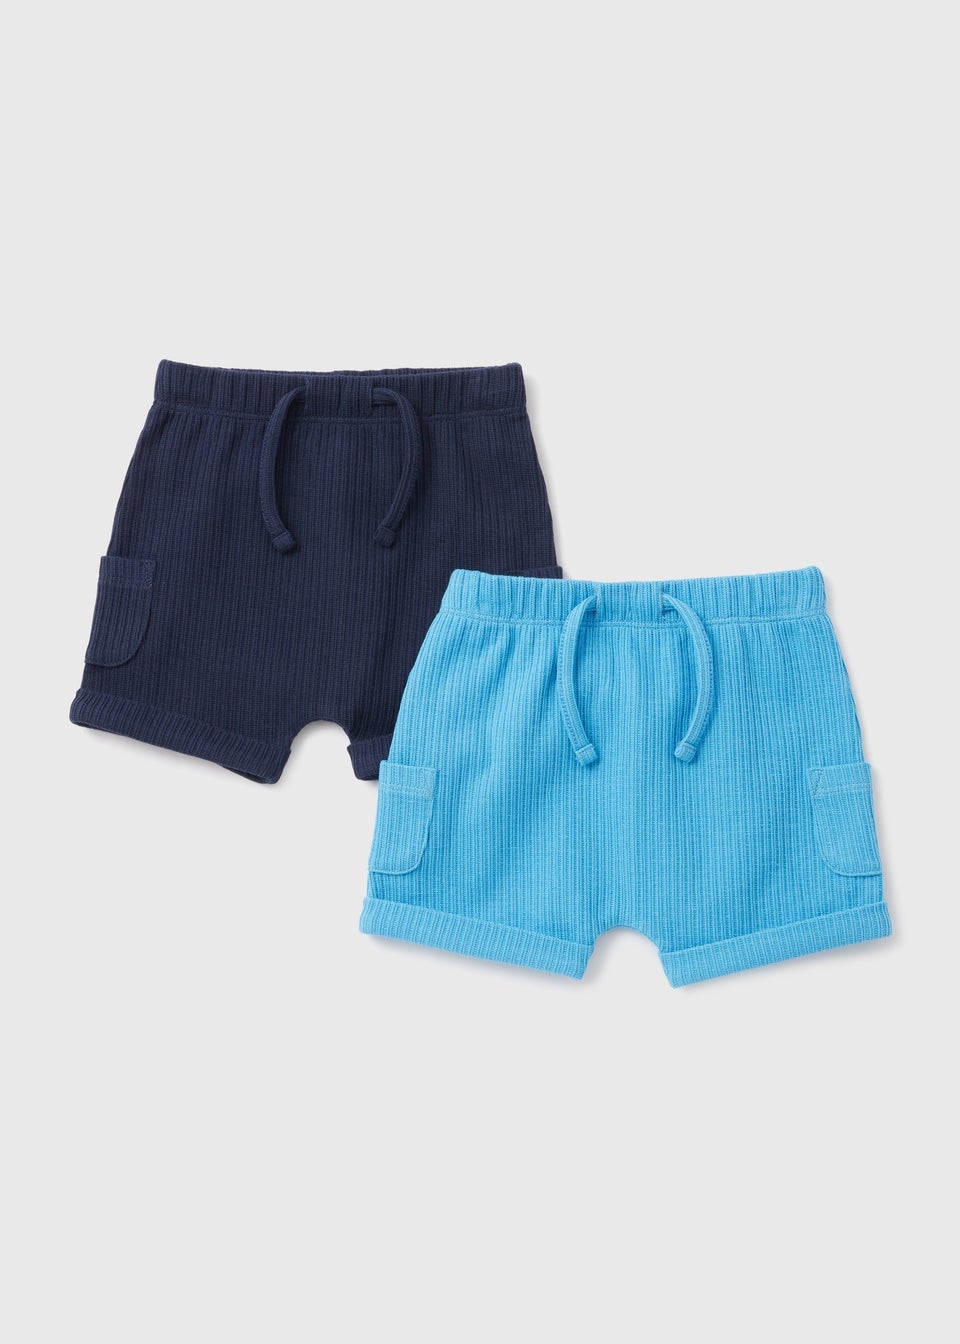 Boys 2 Pack Blue & Navy Cargo Shorts (Newborn-23mths)